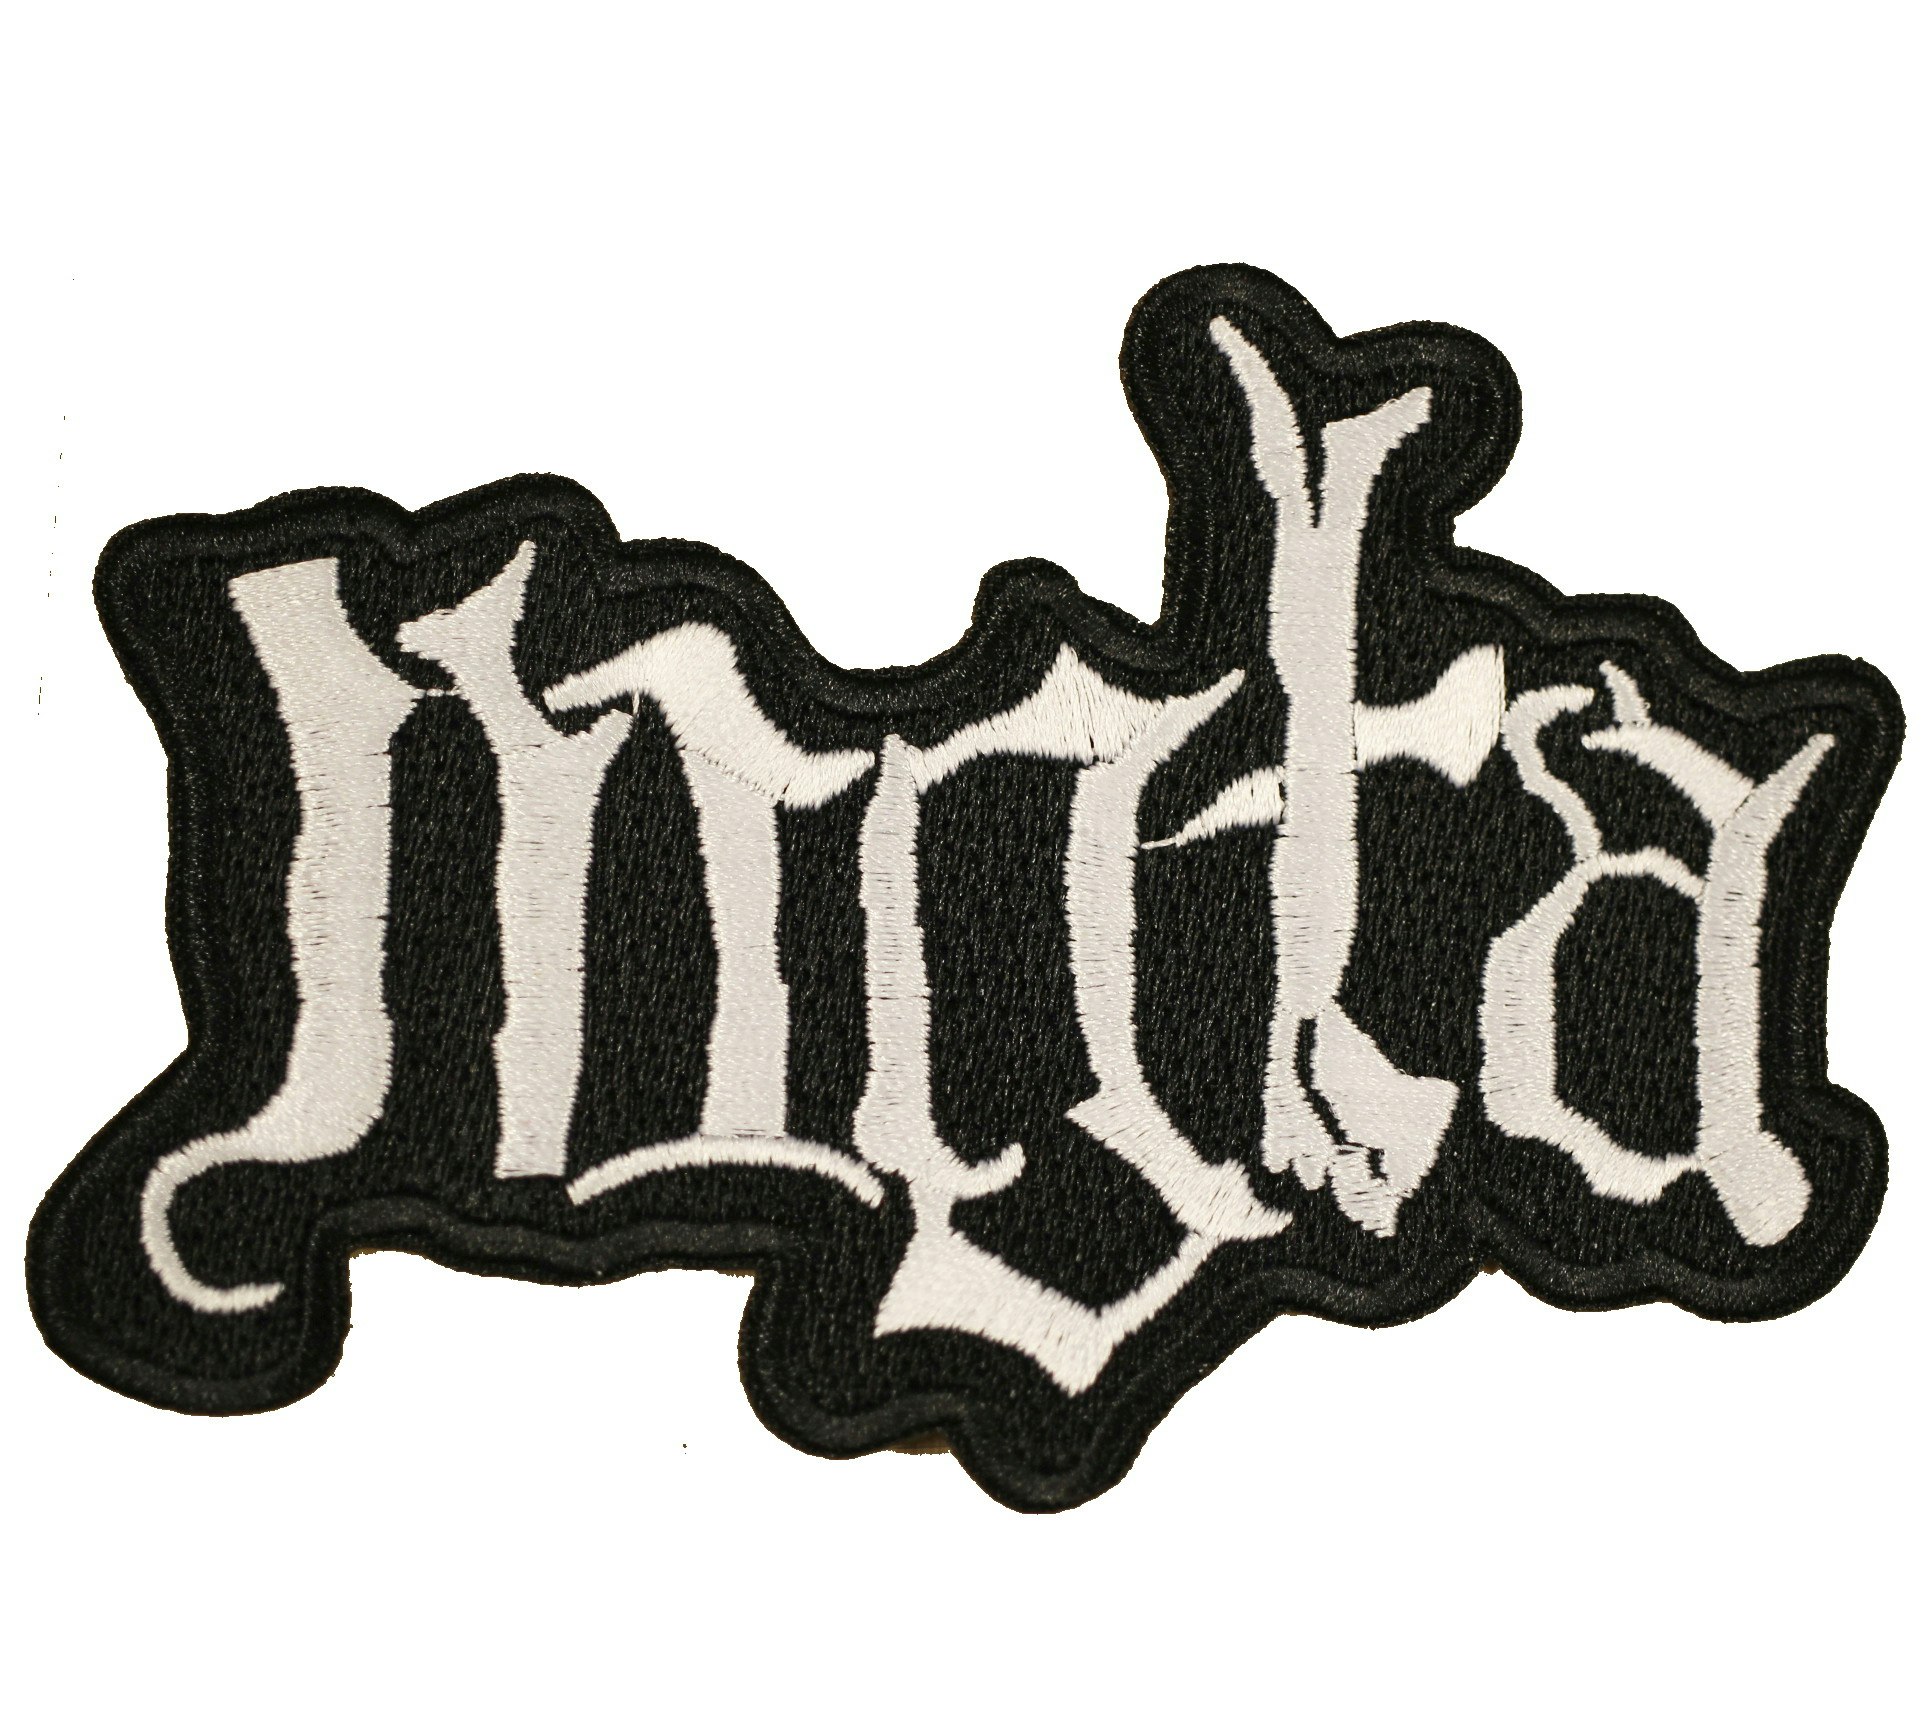 MGTA logo patch